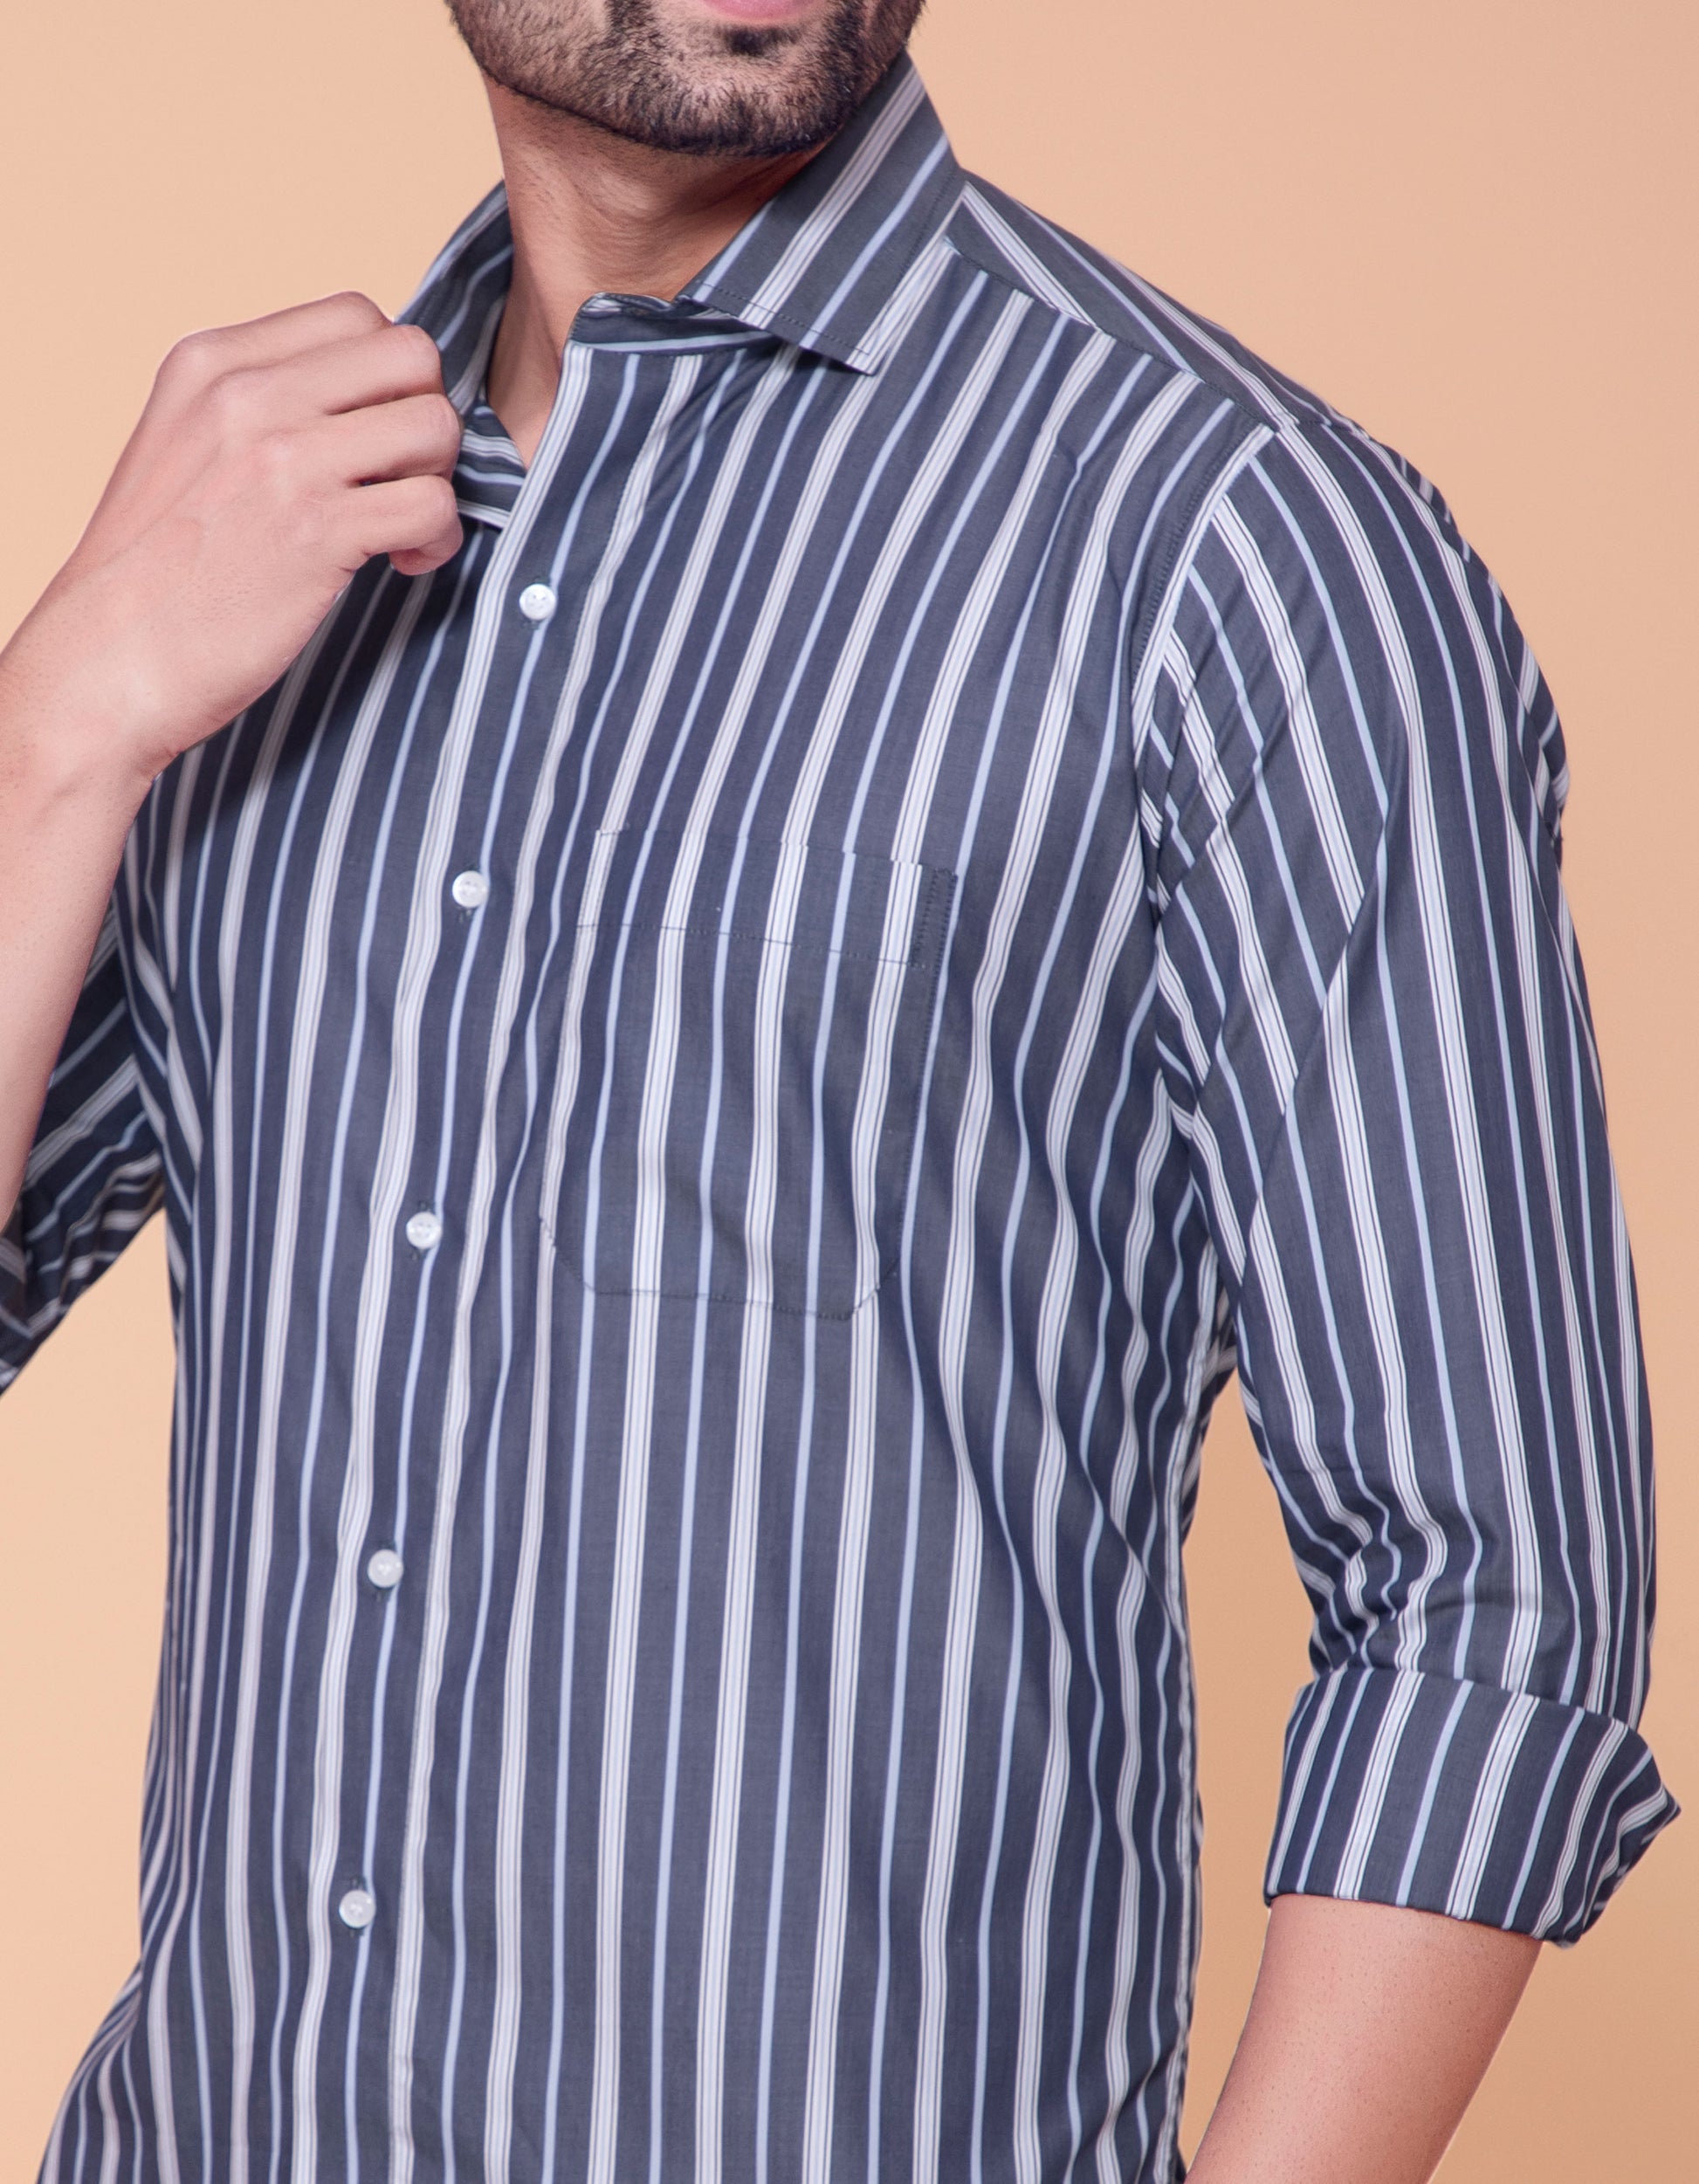 Steel grey stripes shirt